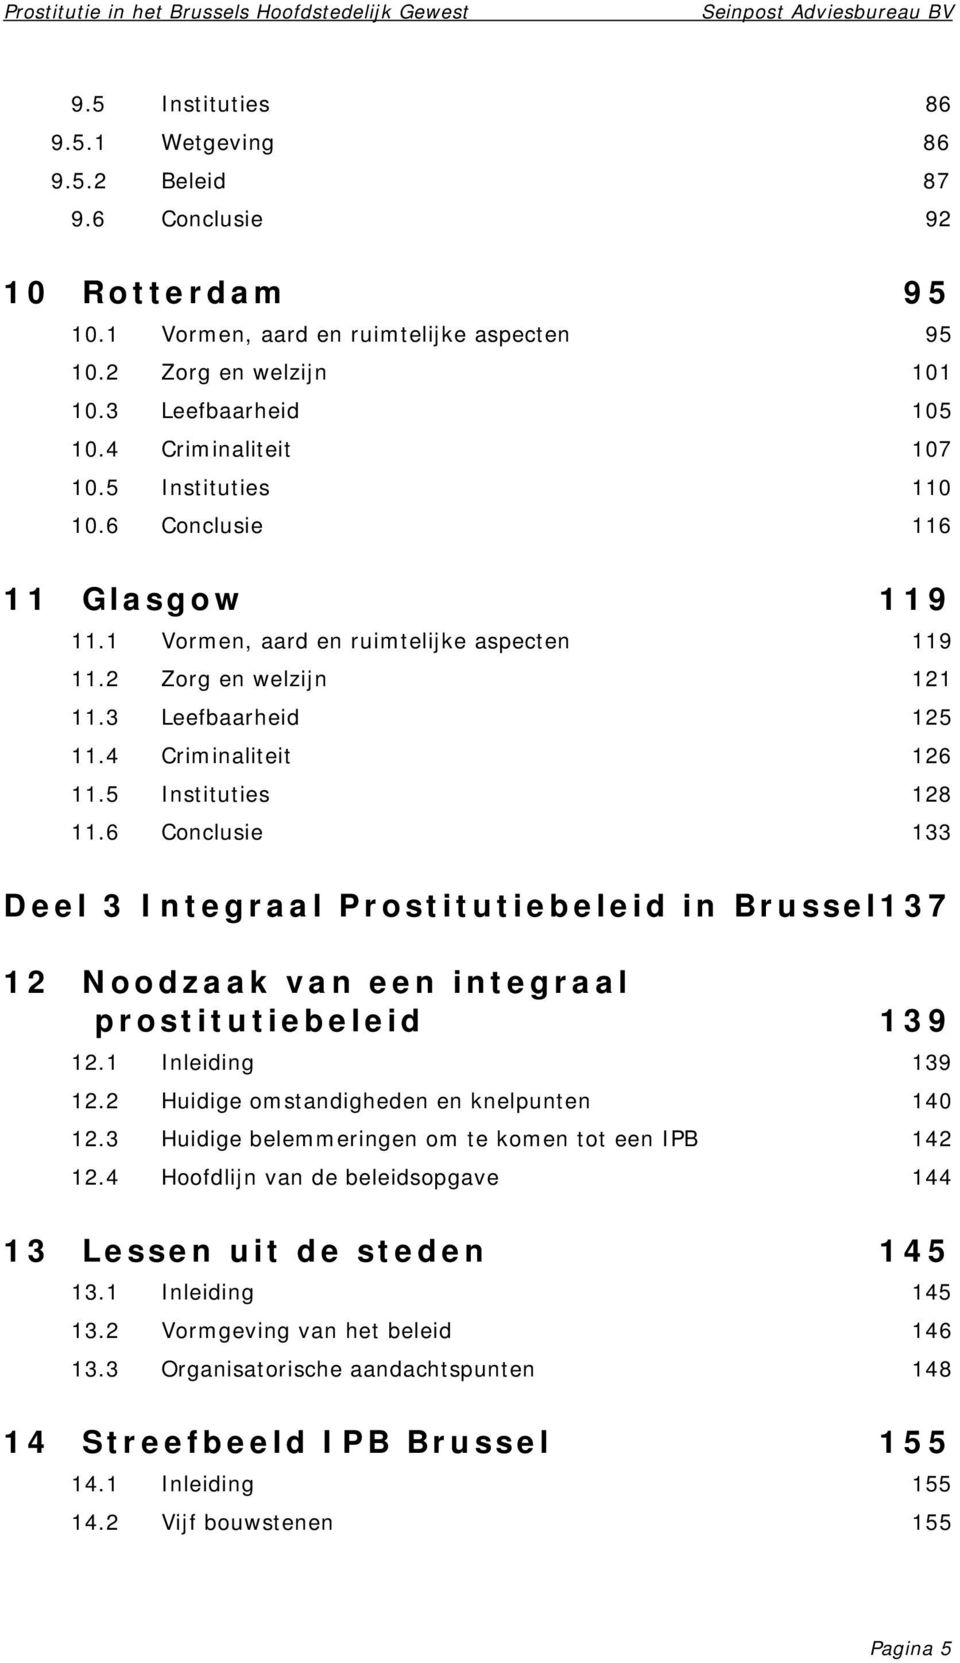 3 Leefbaarheid 125 11.4 Criminaliteit 126 11.5 Instituties 128 11.6 Conclusie 133 Deel 3 Integraal Prostitutiebeleid in Brussel137 12 Noodzaak van een integraal prostitutiebeleid 139 12.